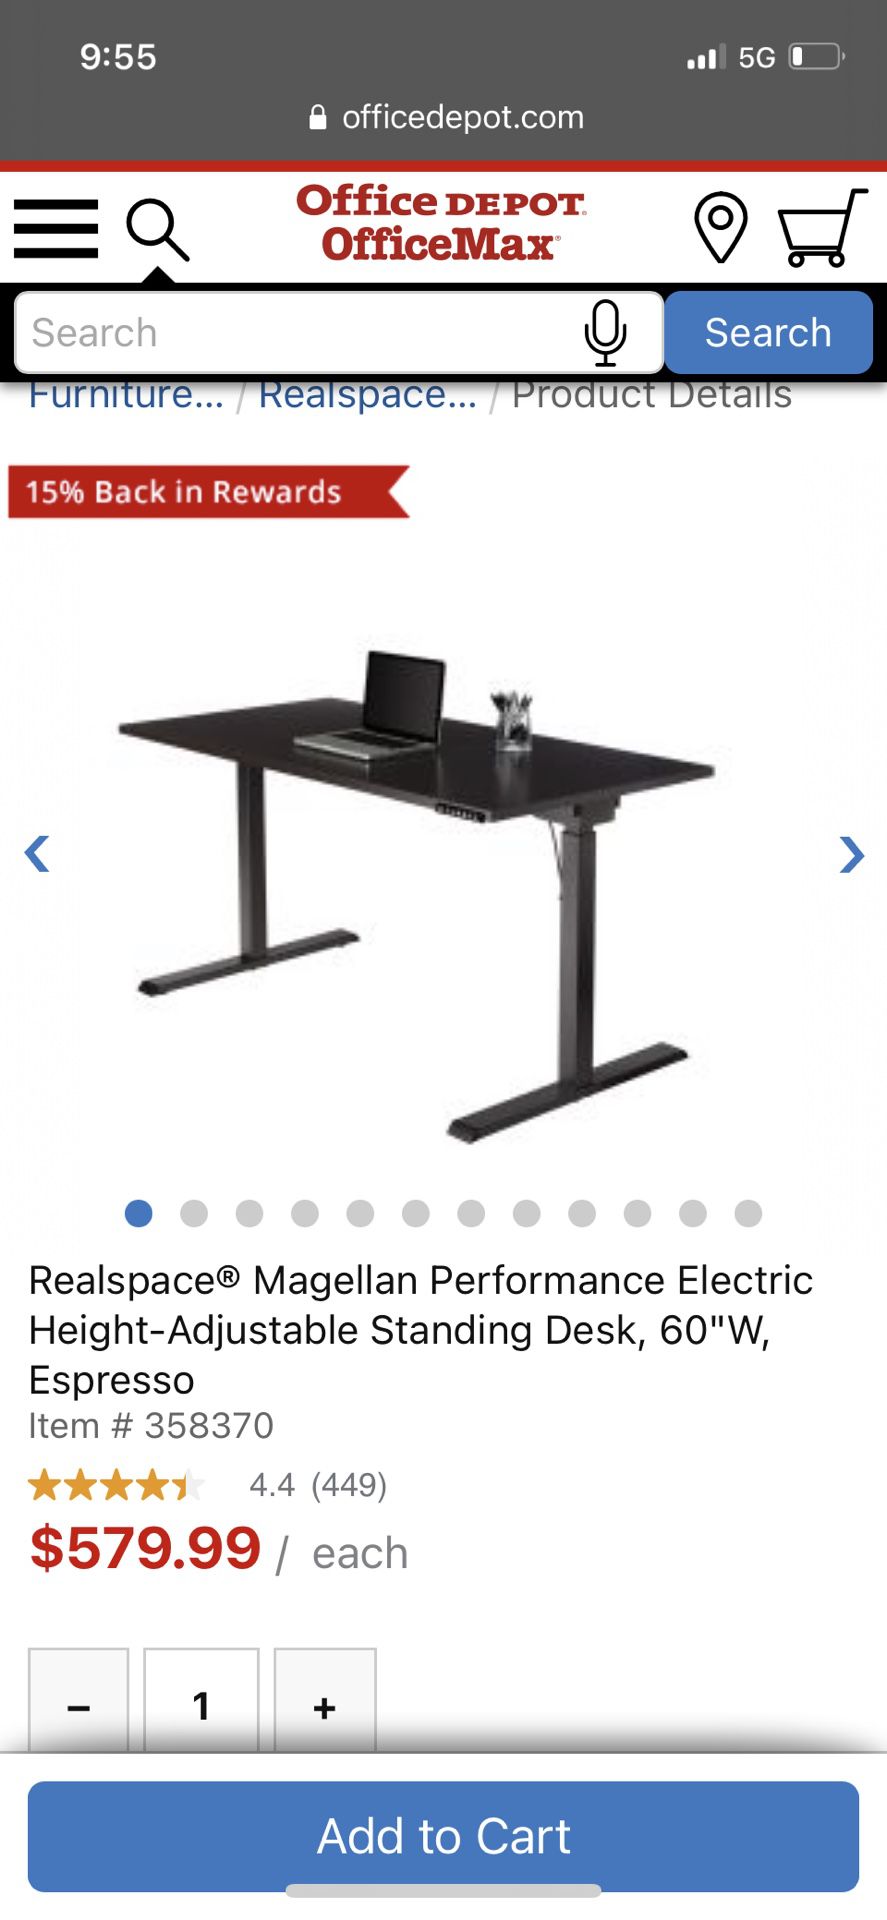 Realspace Magellan Performance Electric Height-Adjustable Standing Desk, 60"W, Espresso